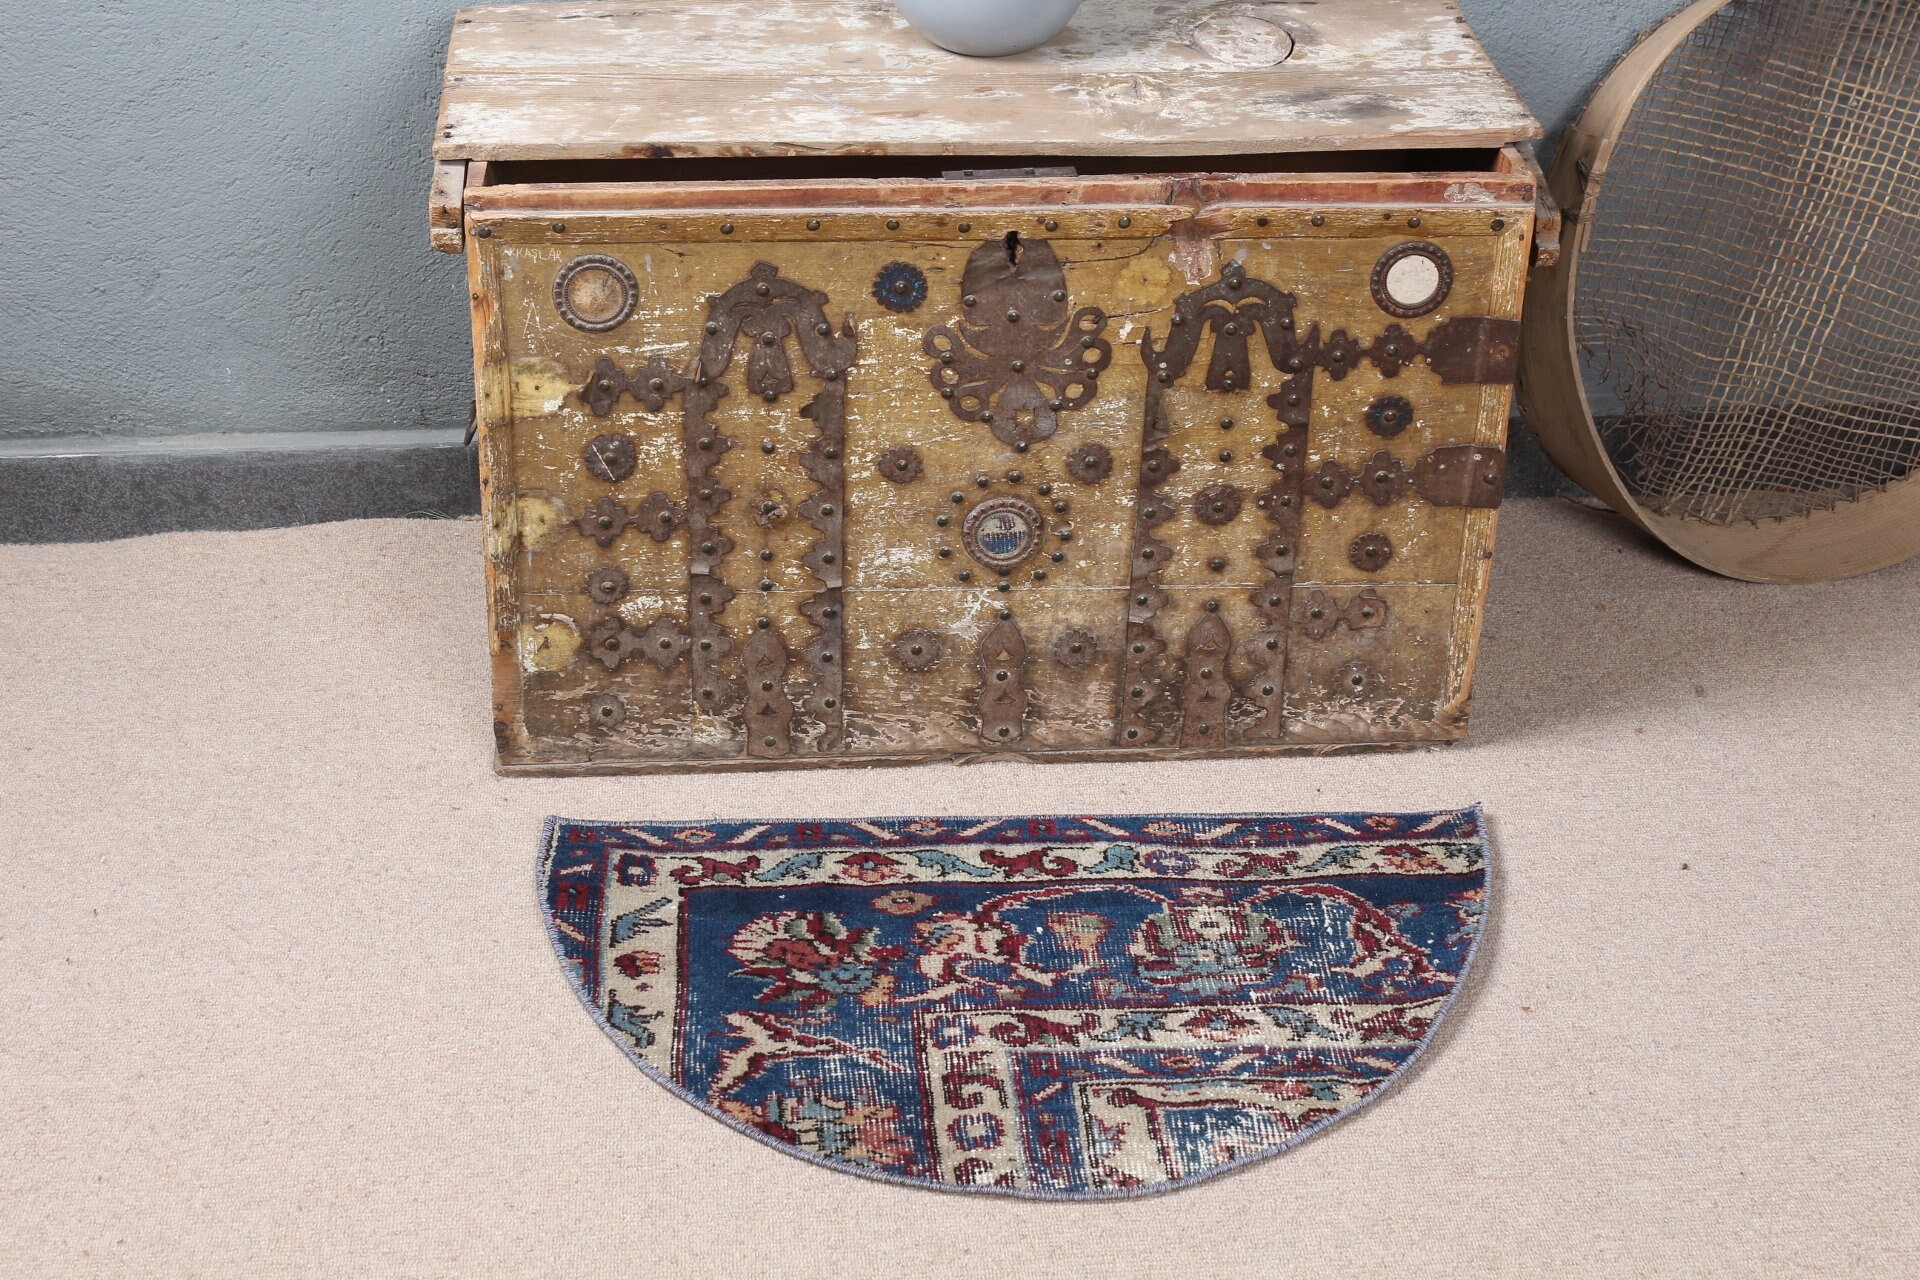 Oriental Rug, Bath Rug, Antique Rug, Bathroom Rug, Art Rugs, Turkish Rugs, Blue Kitchen Rugs, Old Rugs, Vintage Rug, 2.5x1.5 ft Small Rugs